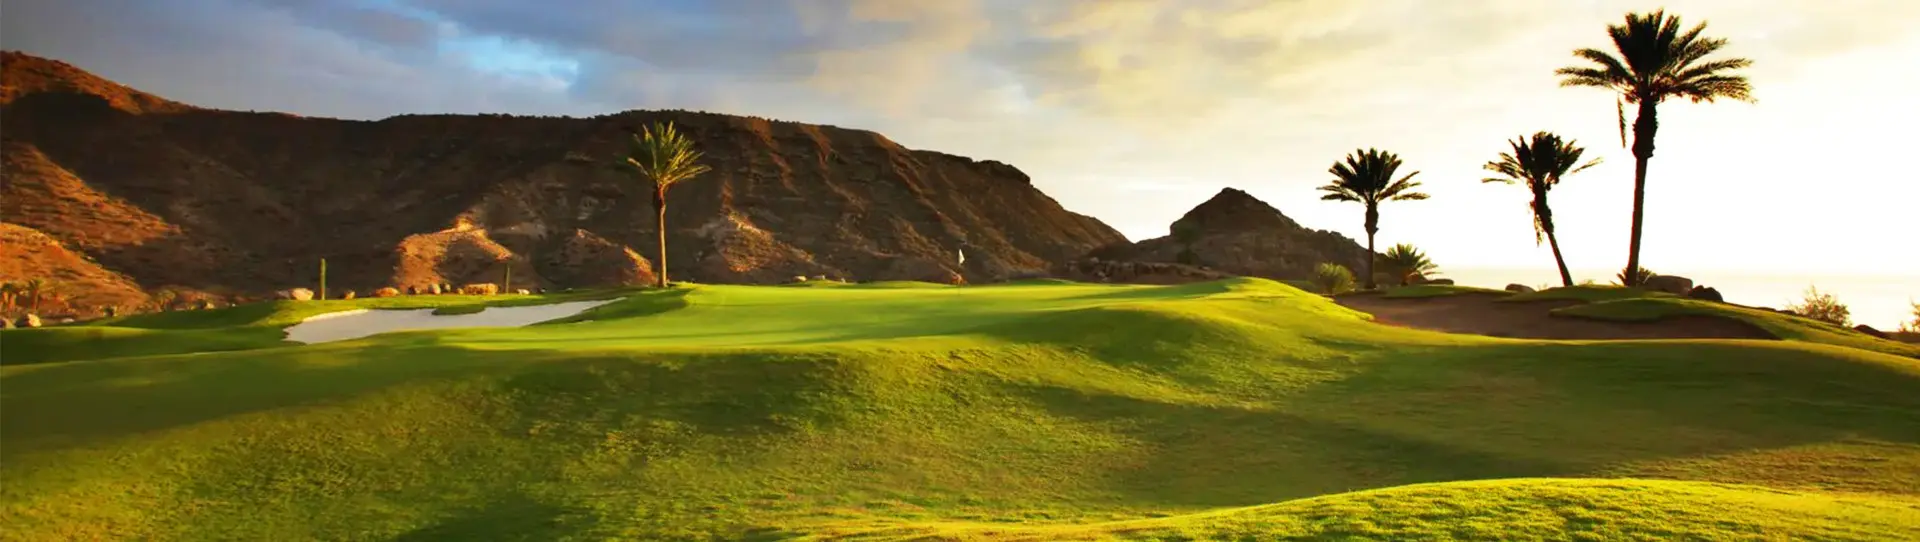 Spain golf courses - Anfi Tauro Golf Course - Photo 1